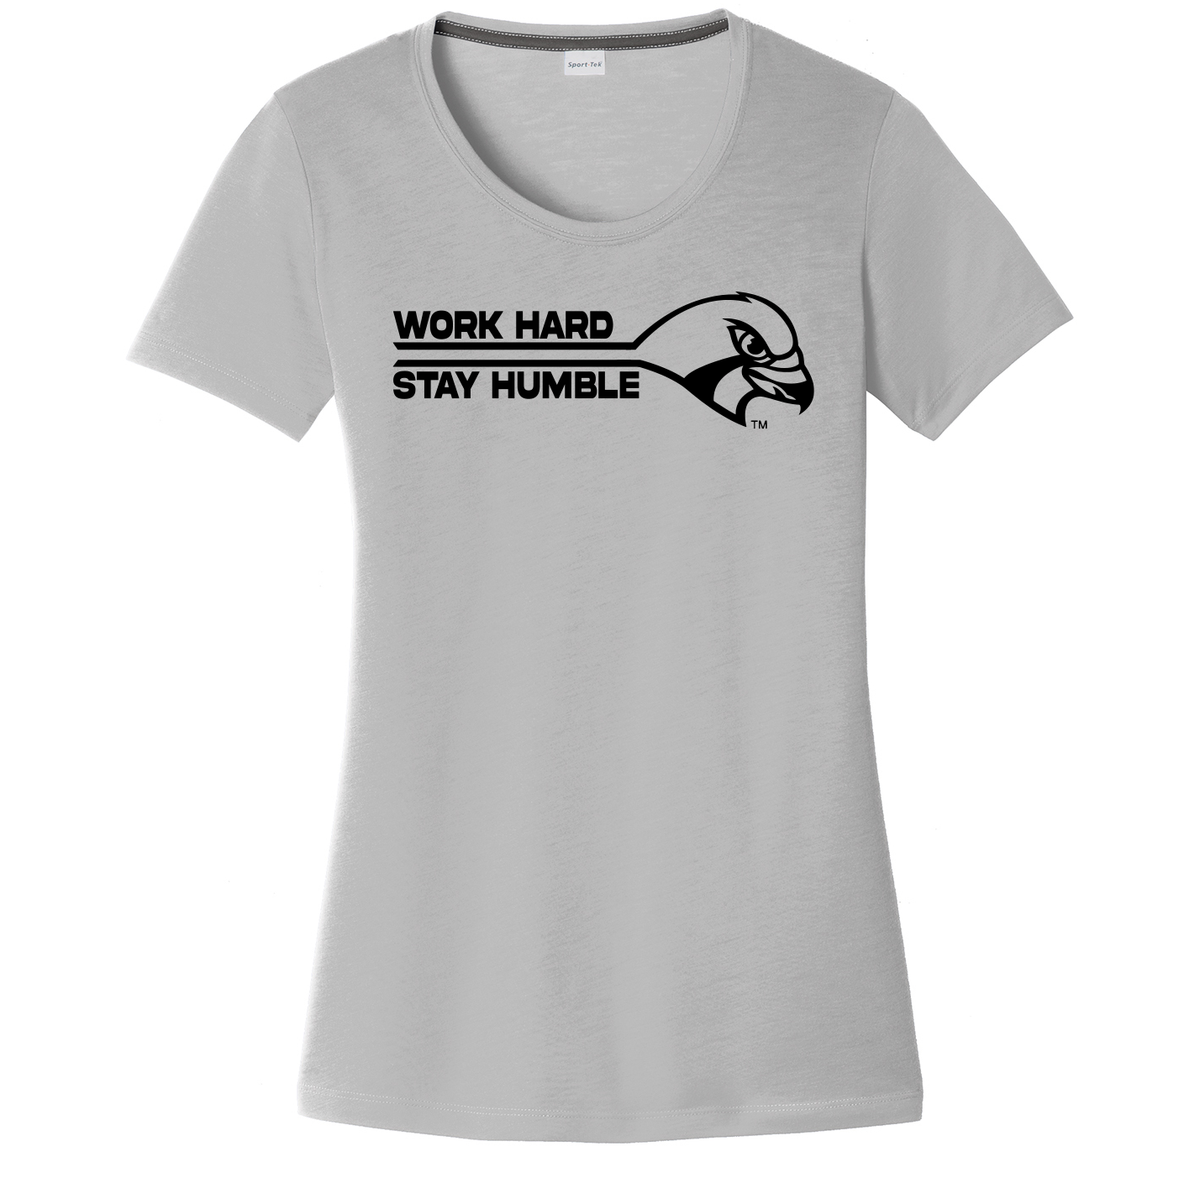 Woodland Falcons High School Soccer Women's CottonTouch Performance T-Shirt